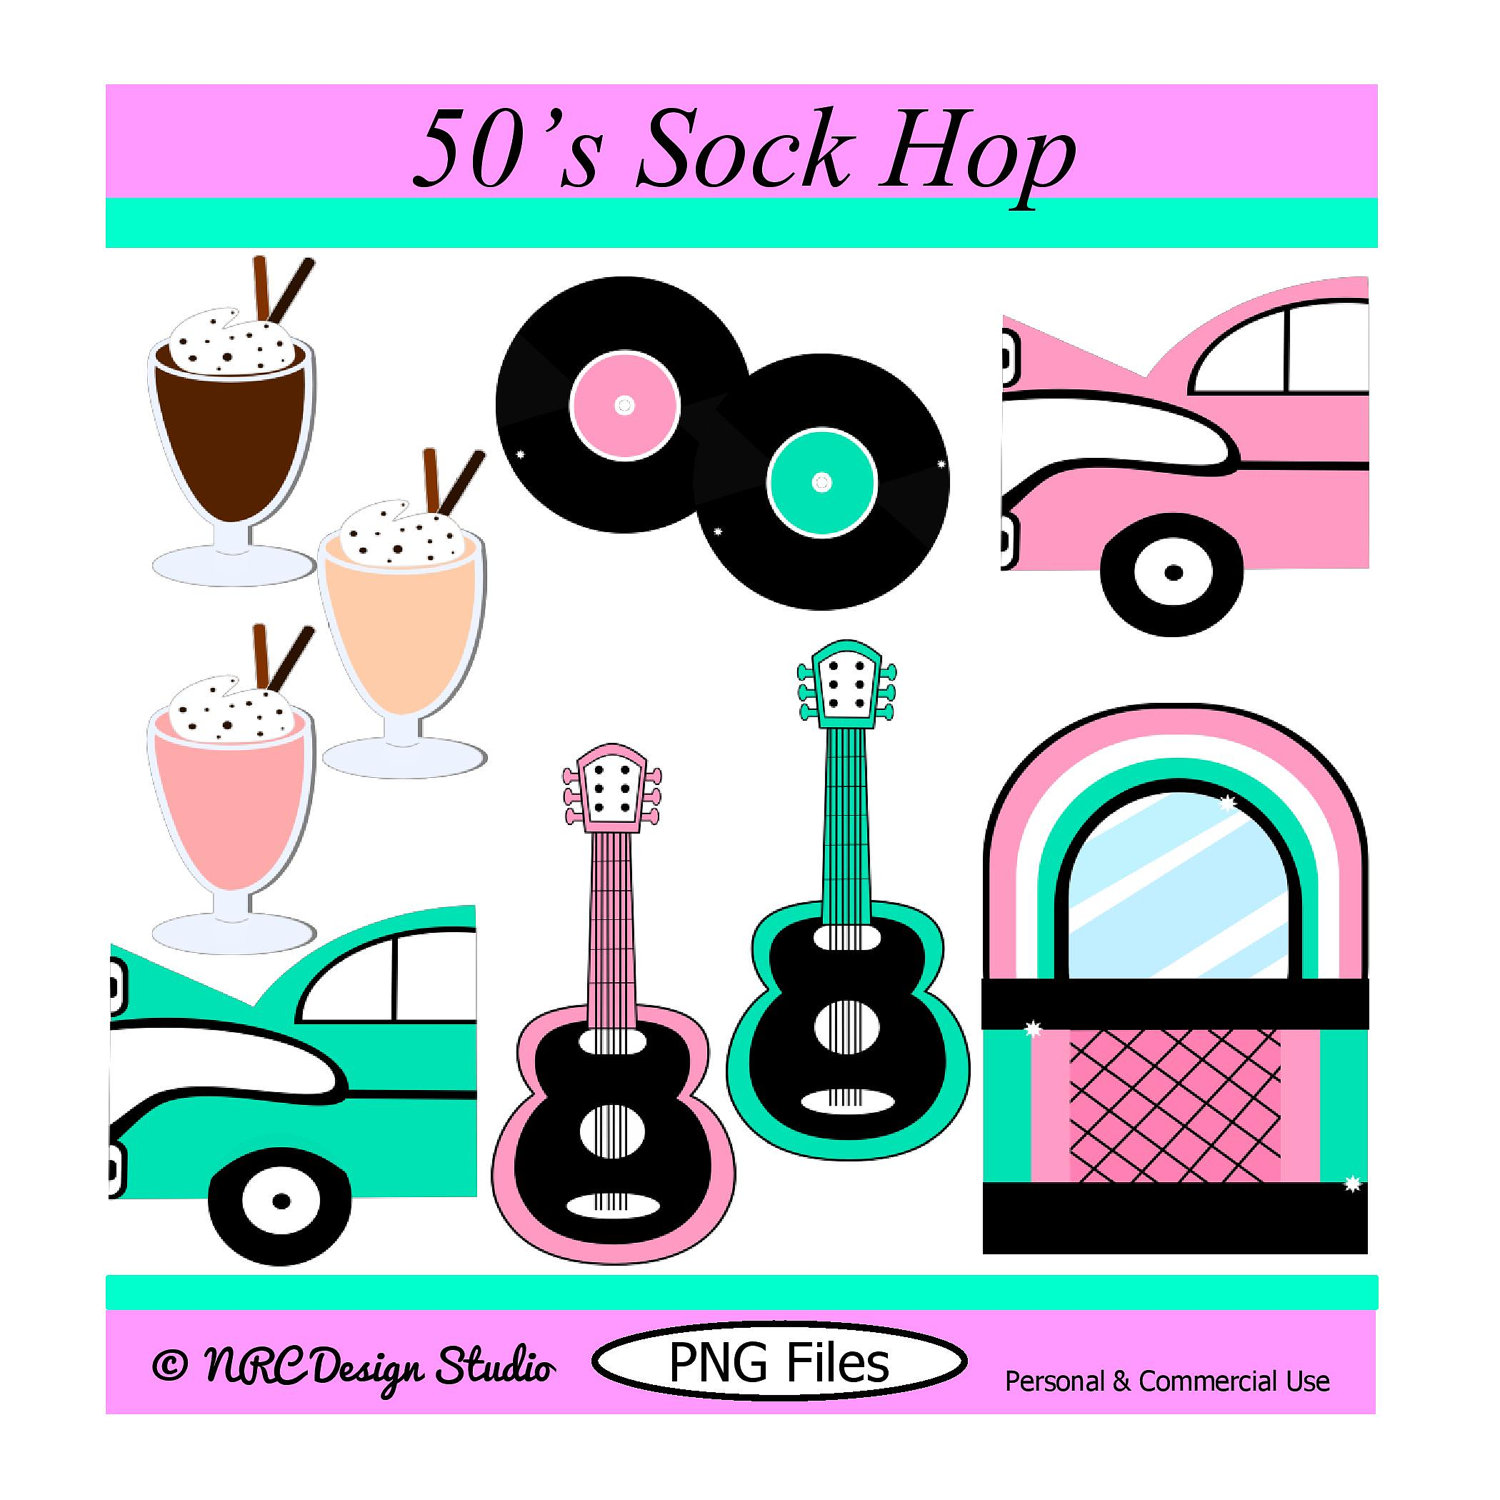 Dollar Day Sale 50's Sock Hop Clipart. by NRCDesignStudio on Etsy